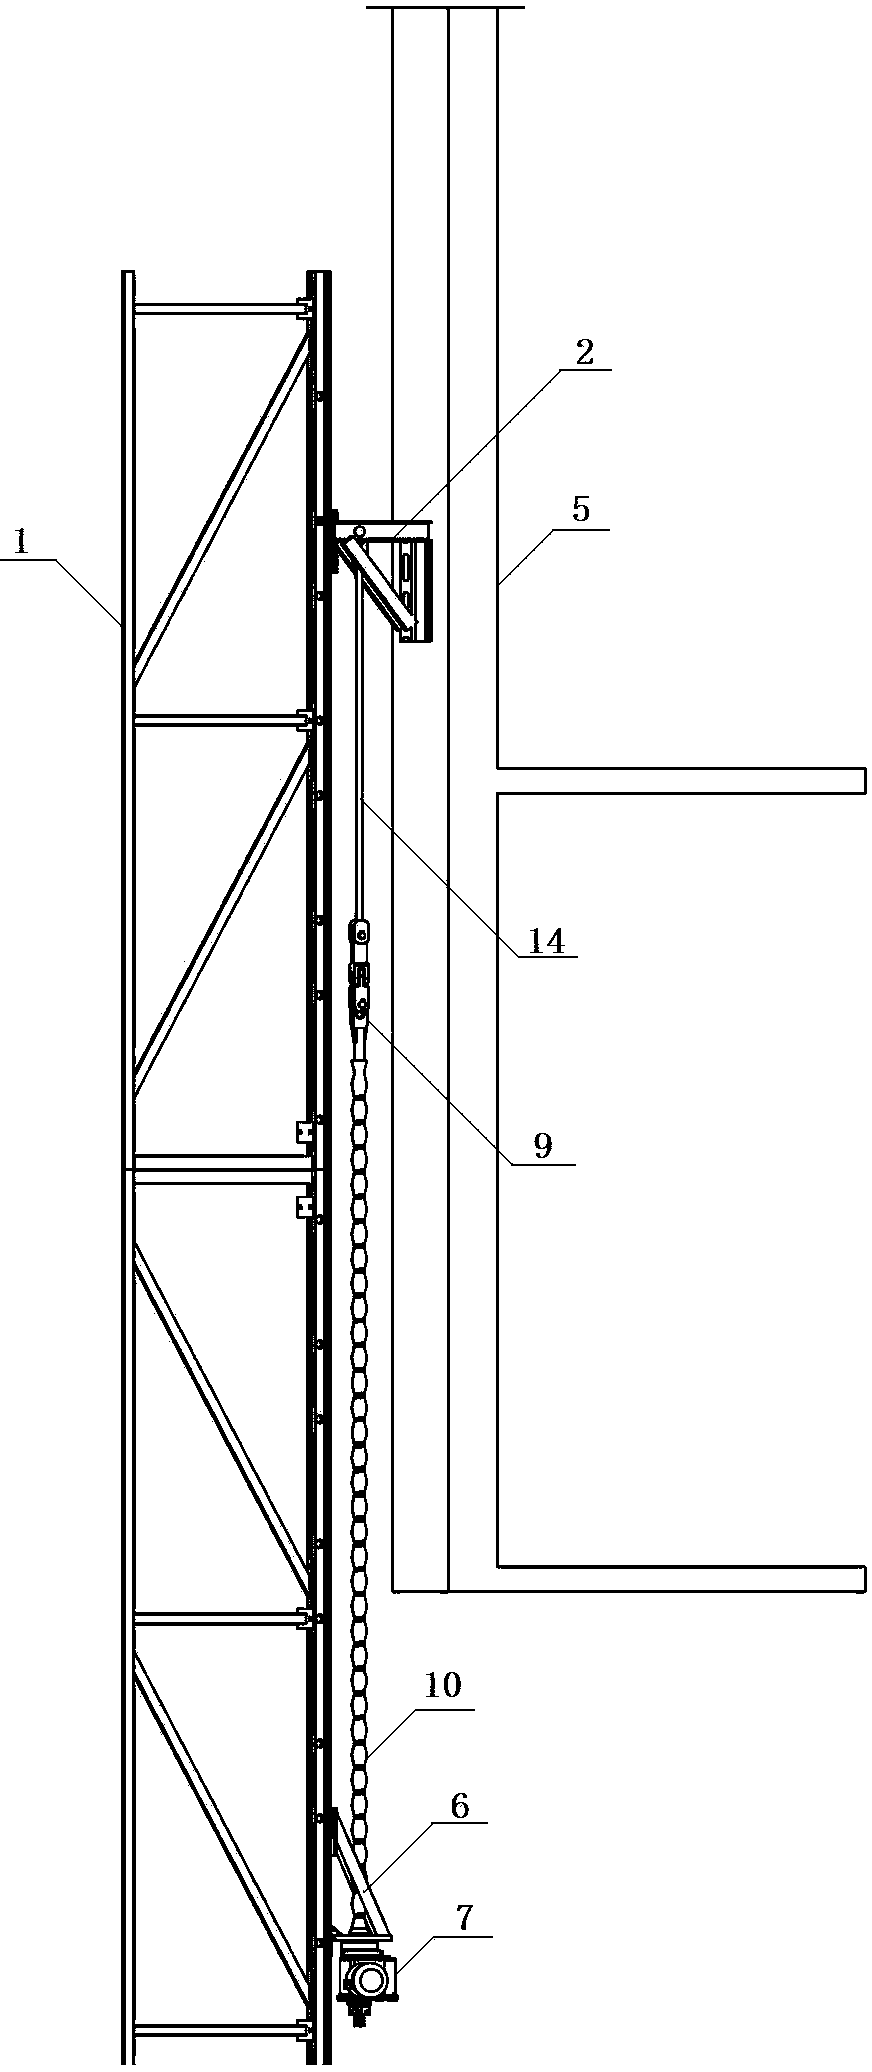 Lifting scaffold electric lifting mechanism